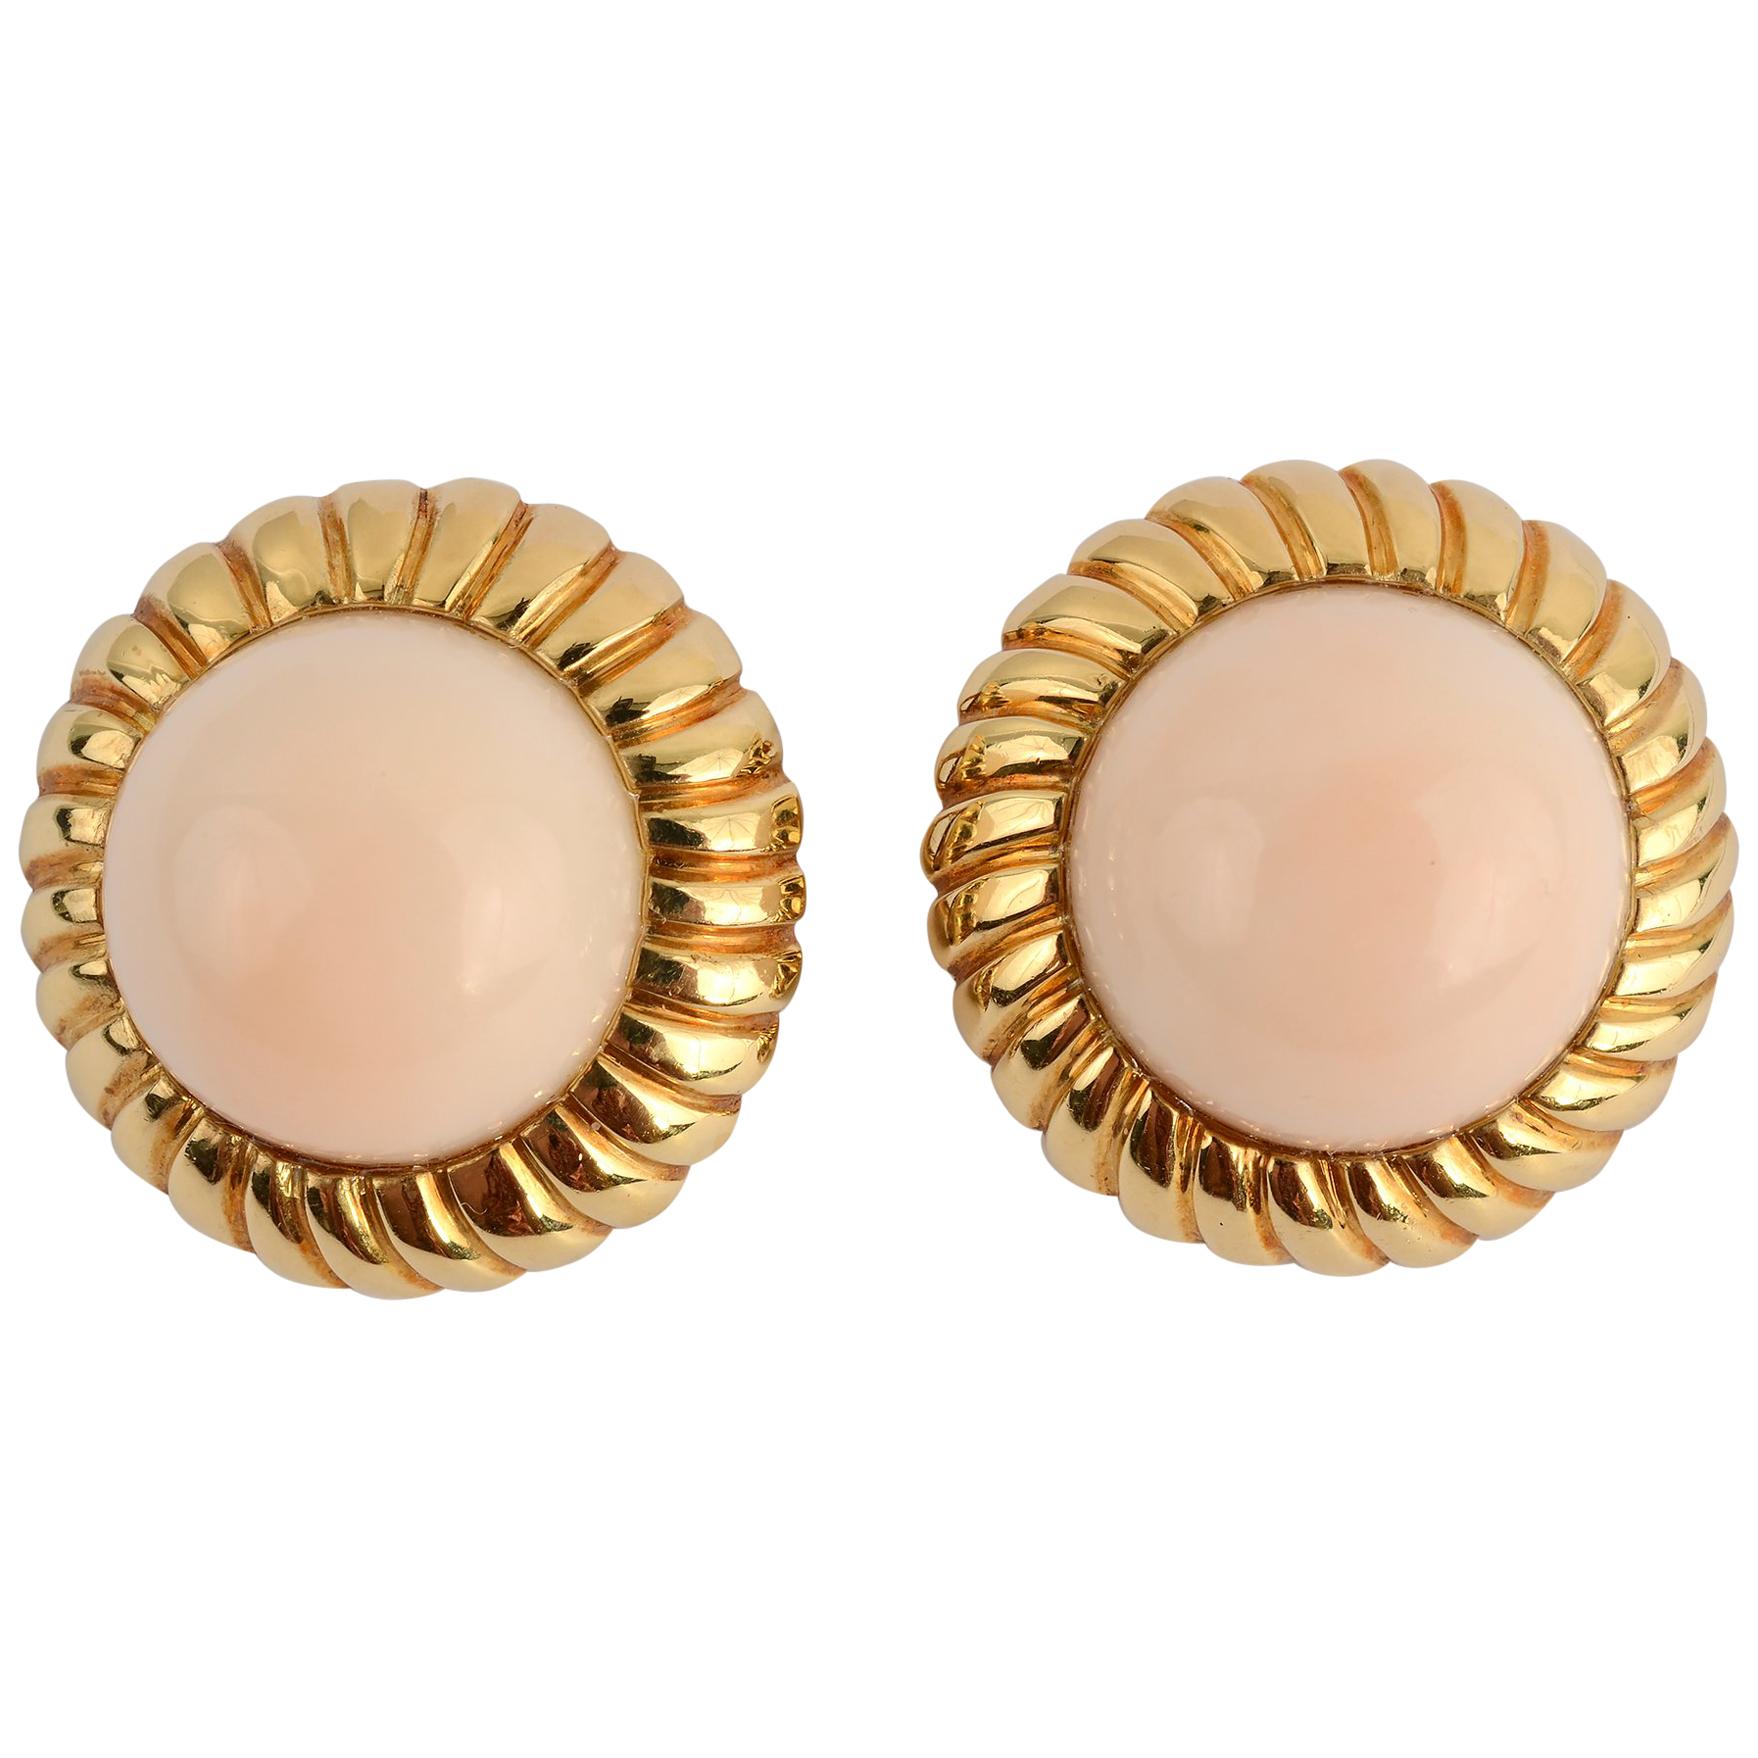 Angelskin Coral Gold Earrings